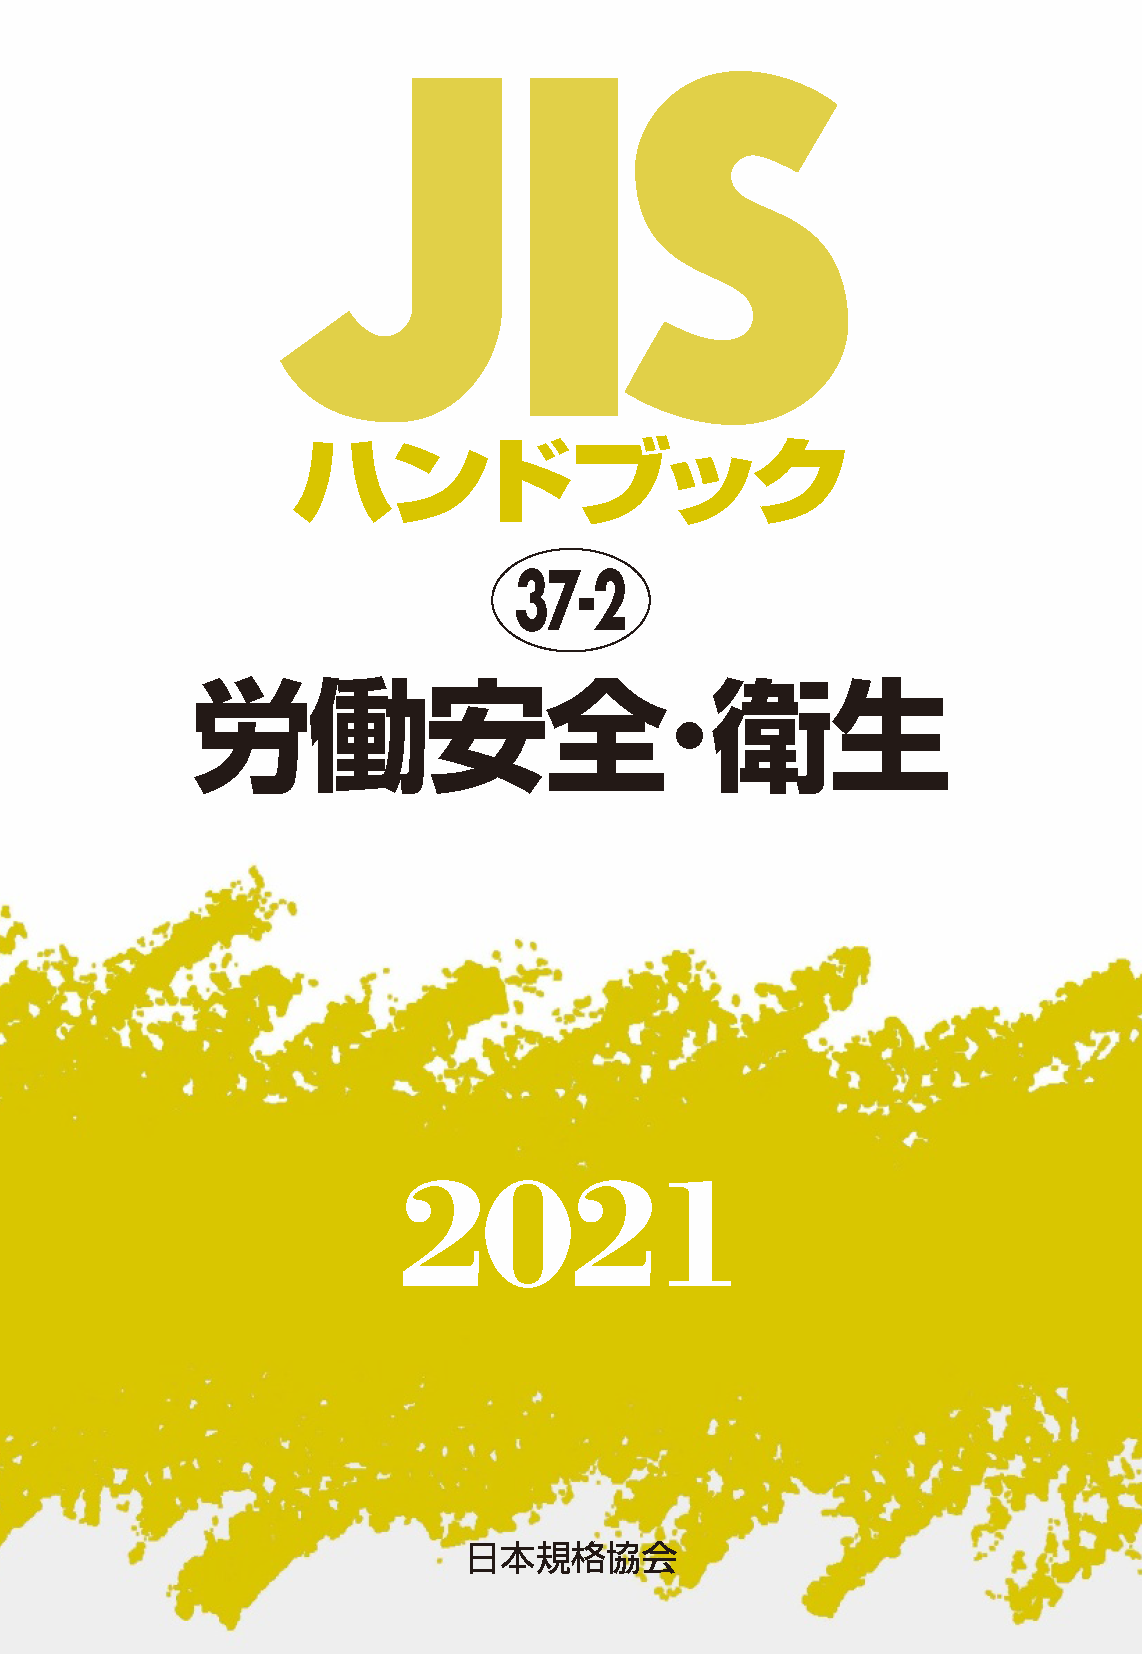 JIS HB 37-2 労働安全・衛生 2021 | 日本規格協会 JSA Group Webdesk